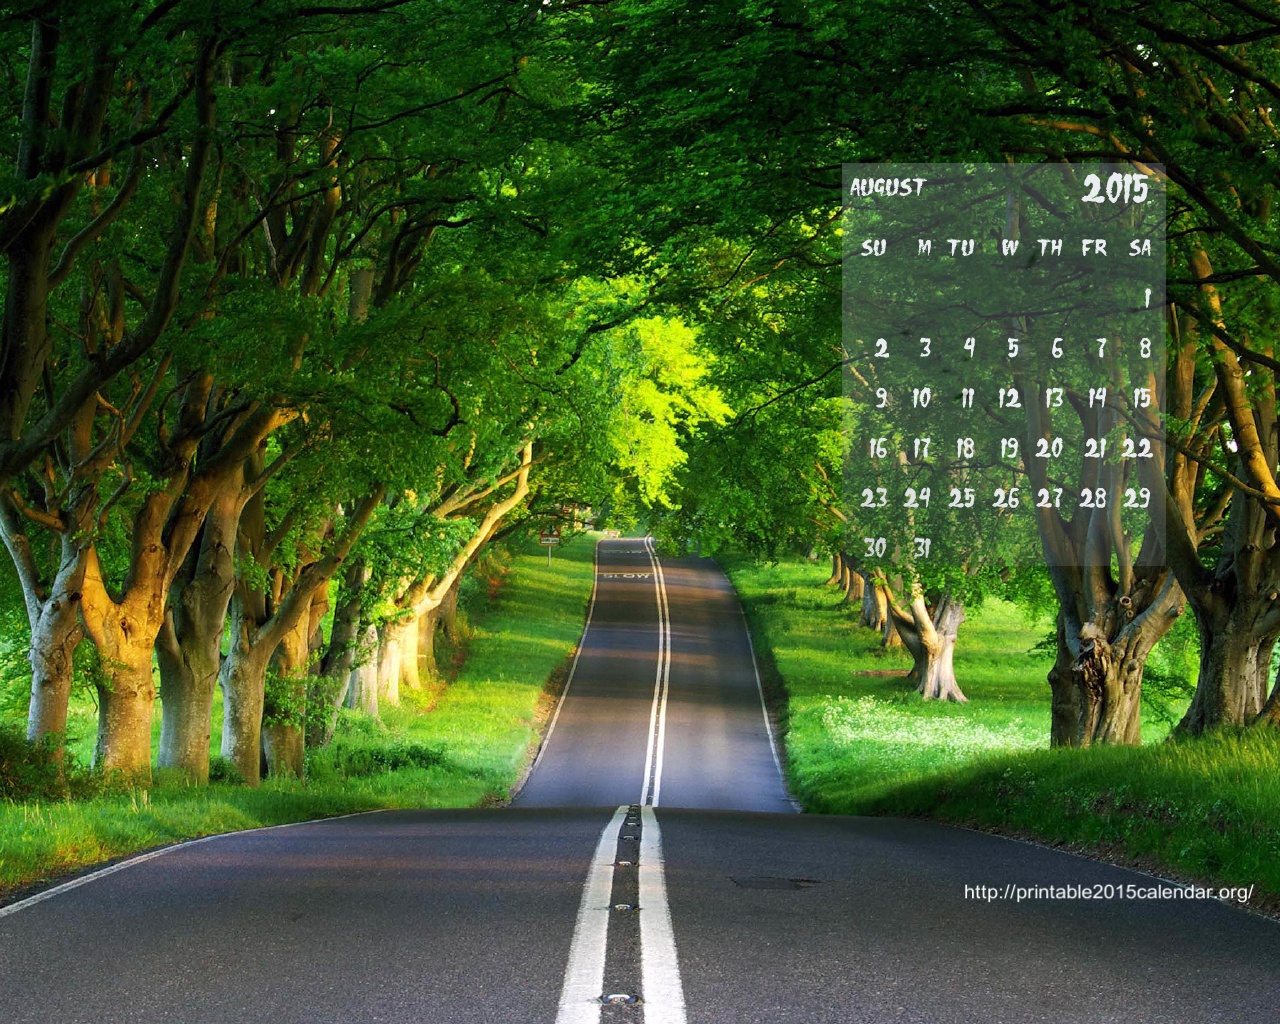 May Calendar Wallpaper